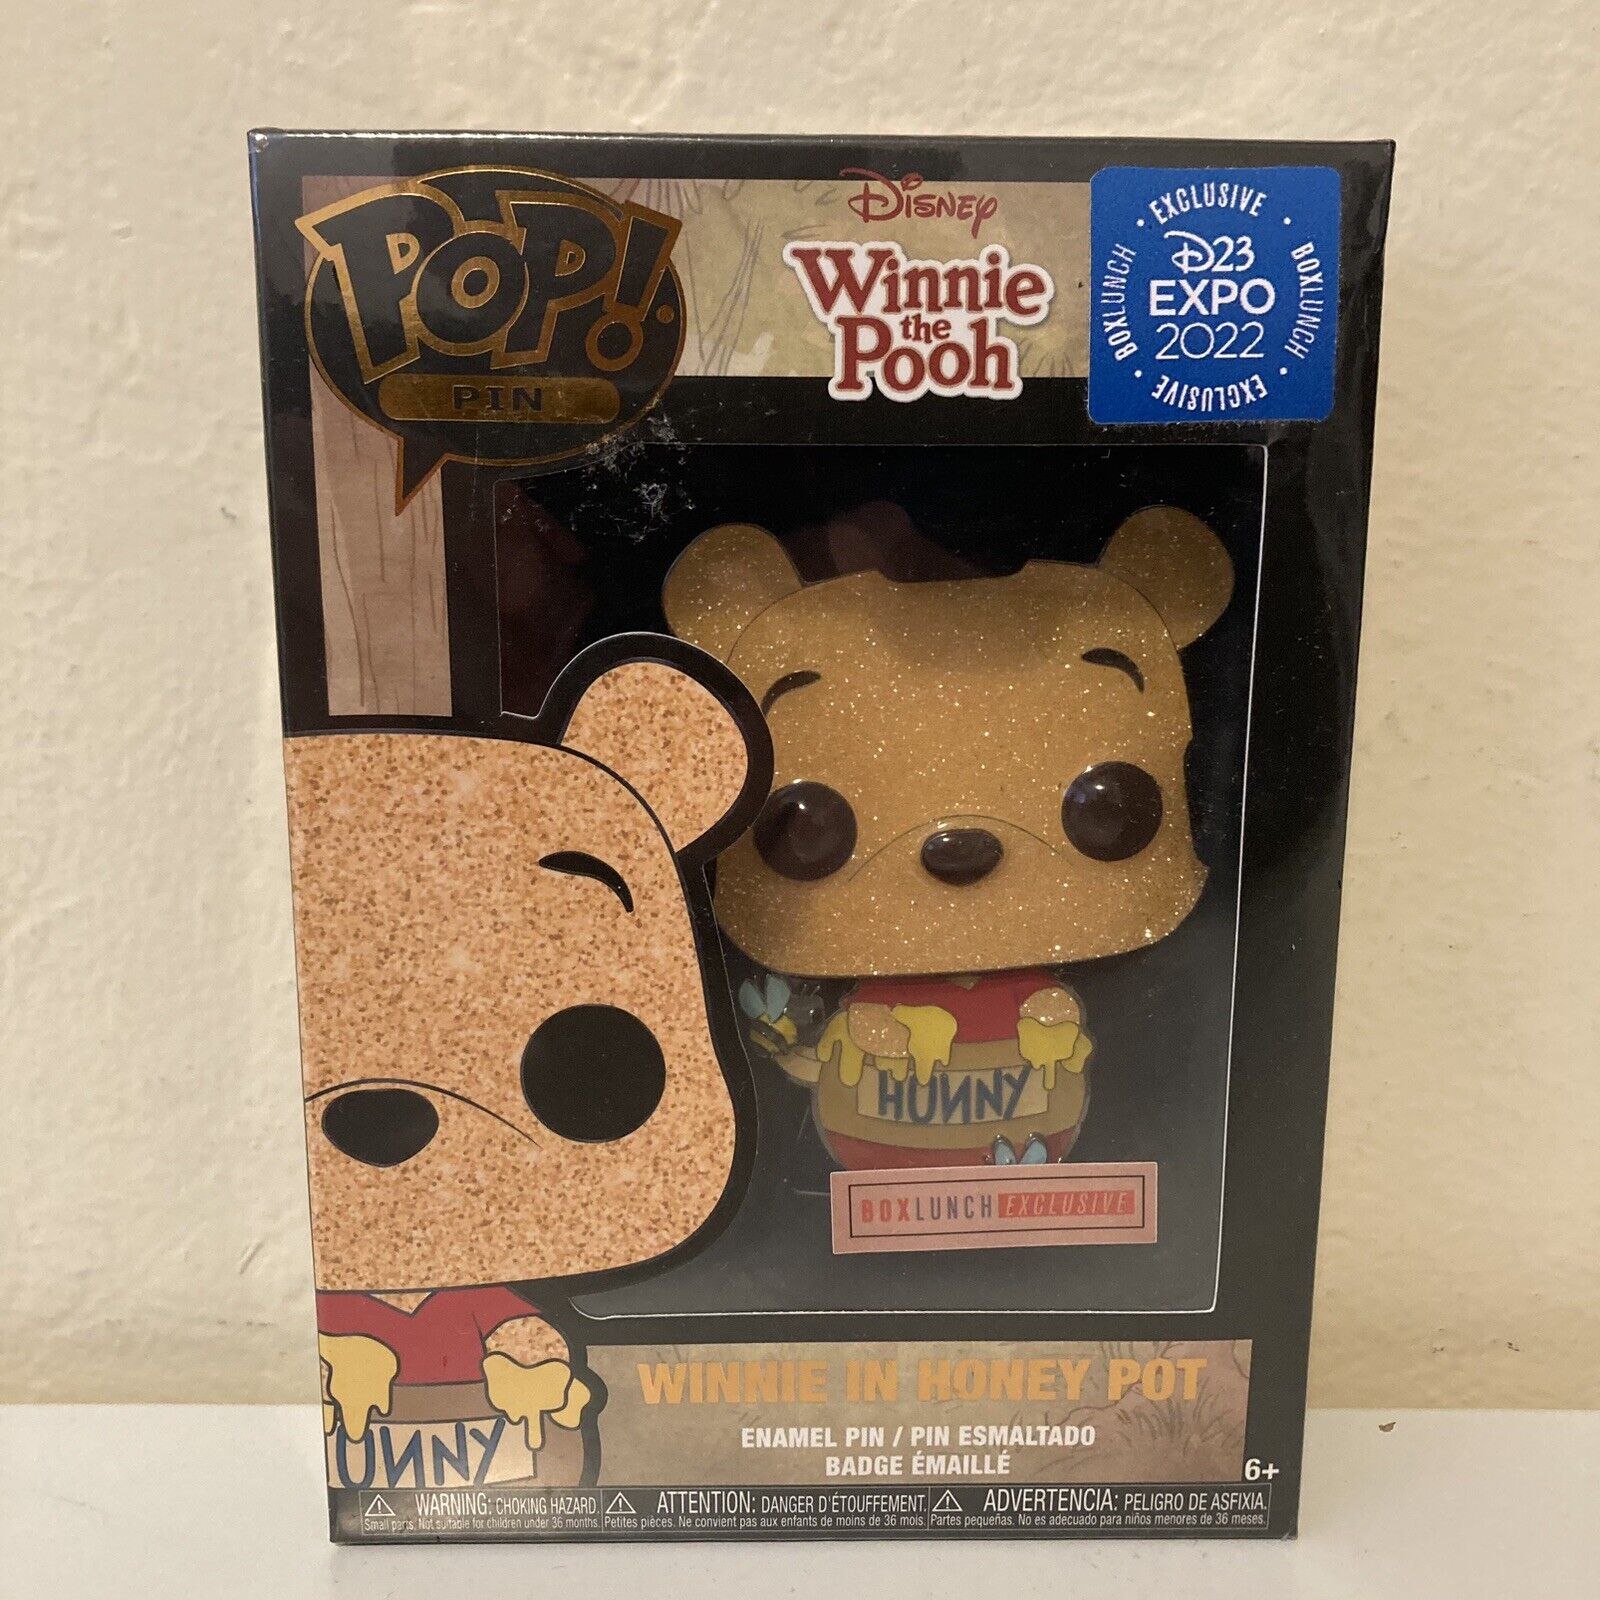 Funko Pop Disney Winne The Pooh in Honey Pot Box Lunch Expo 2022 Glitter Pin